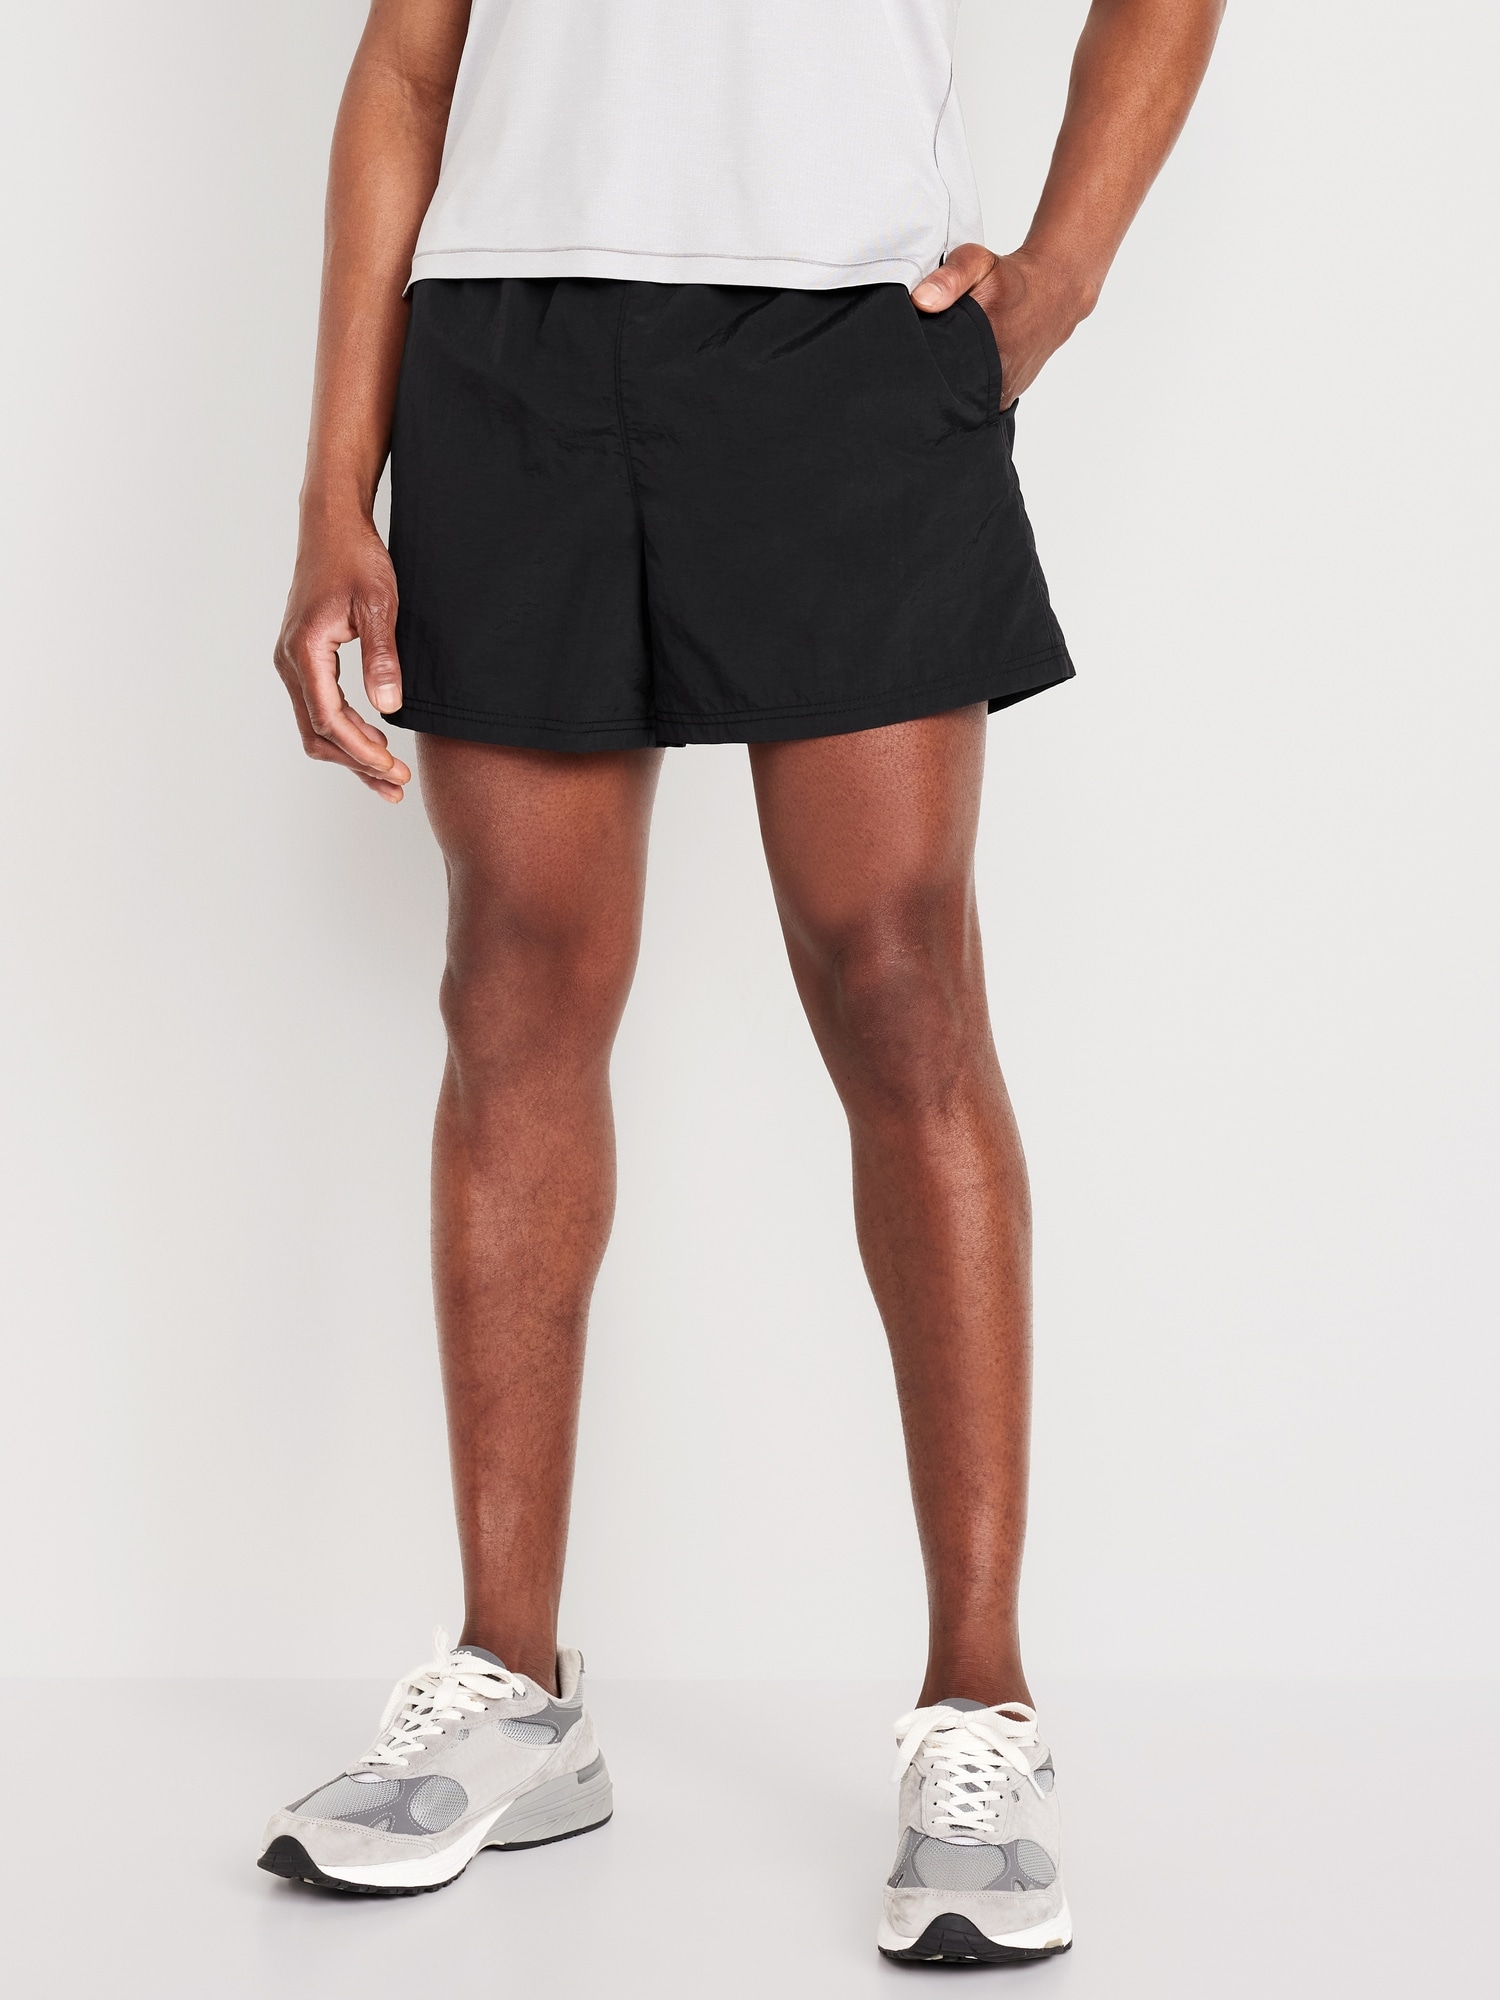 Explore Shorts -- 5-inch inseam